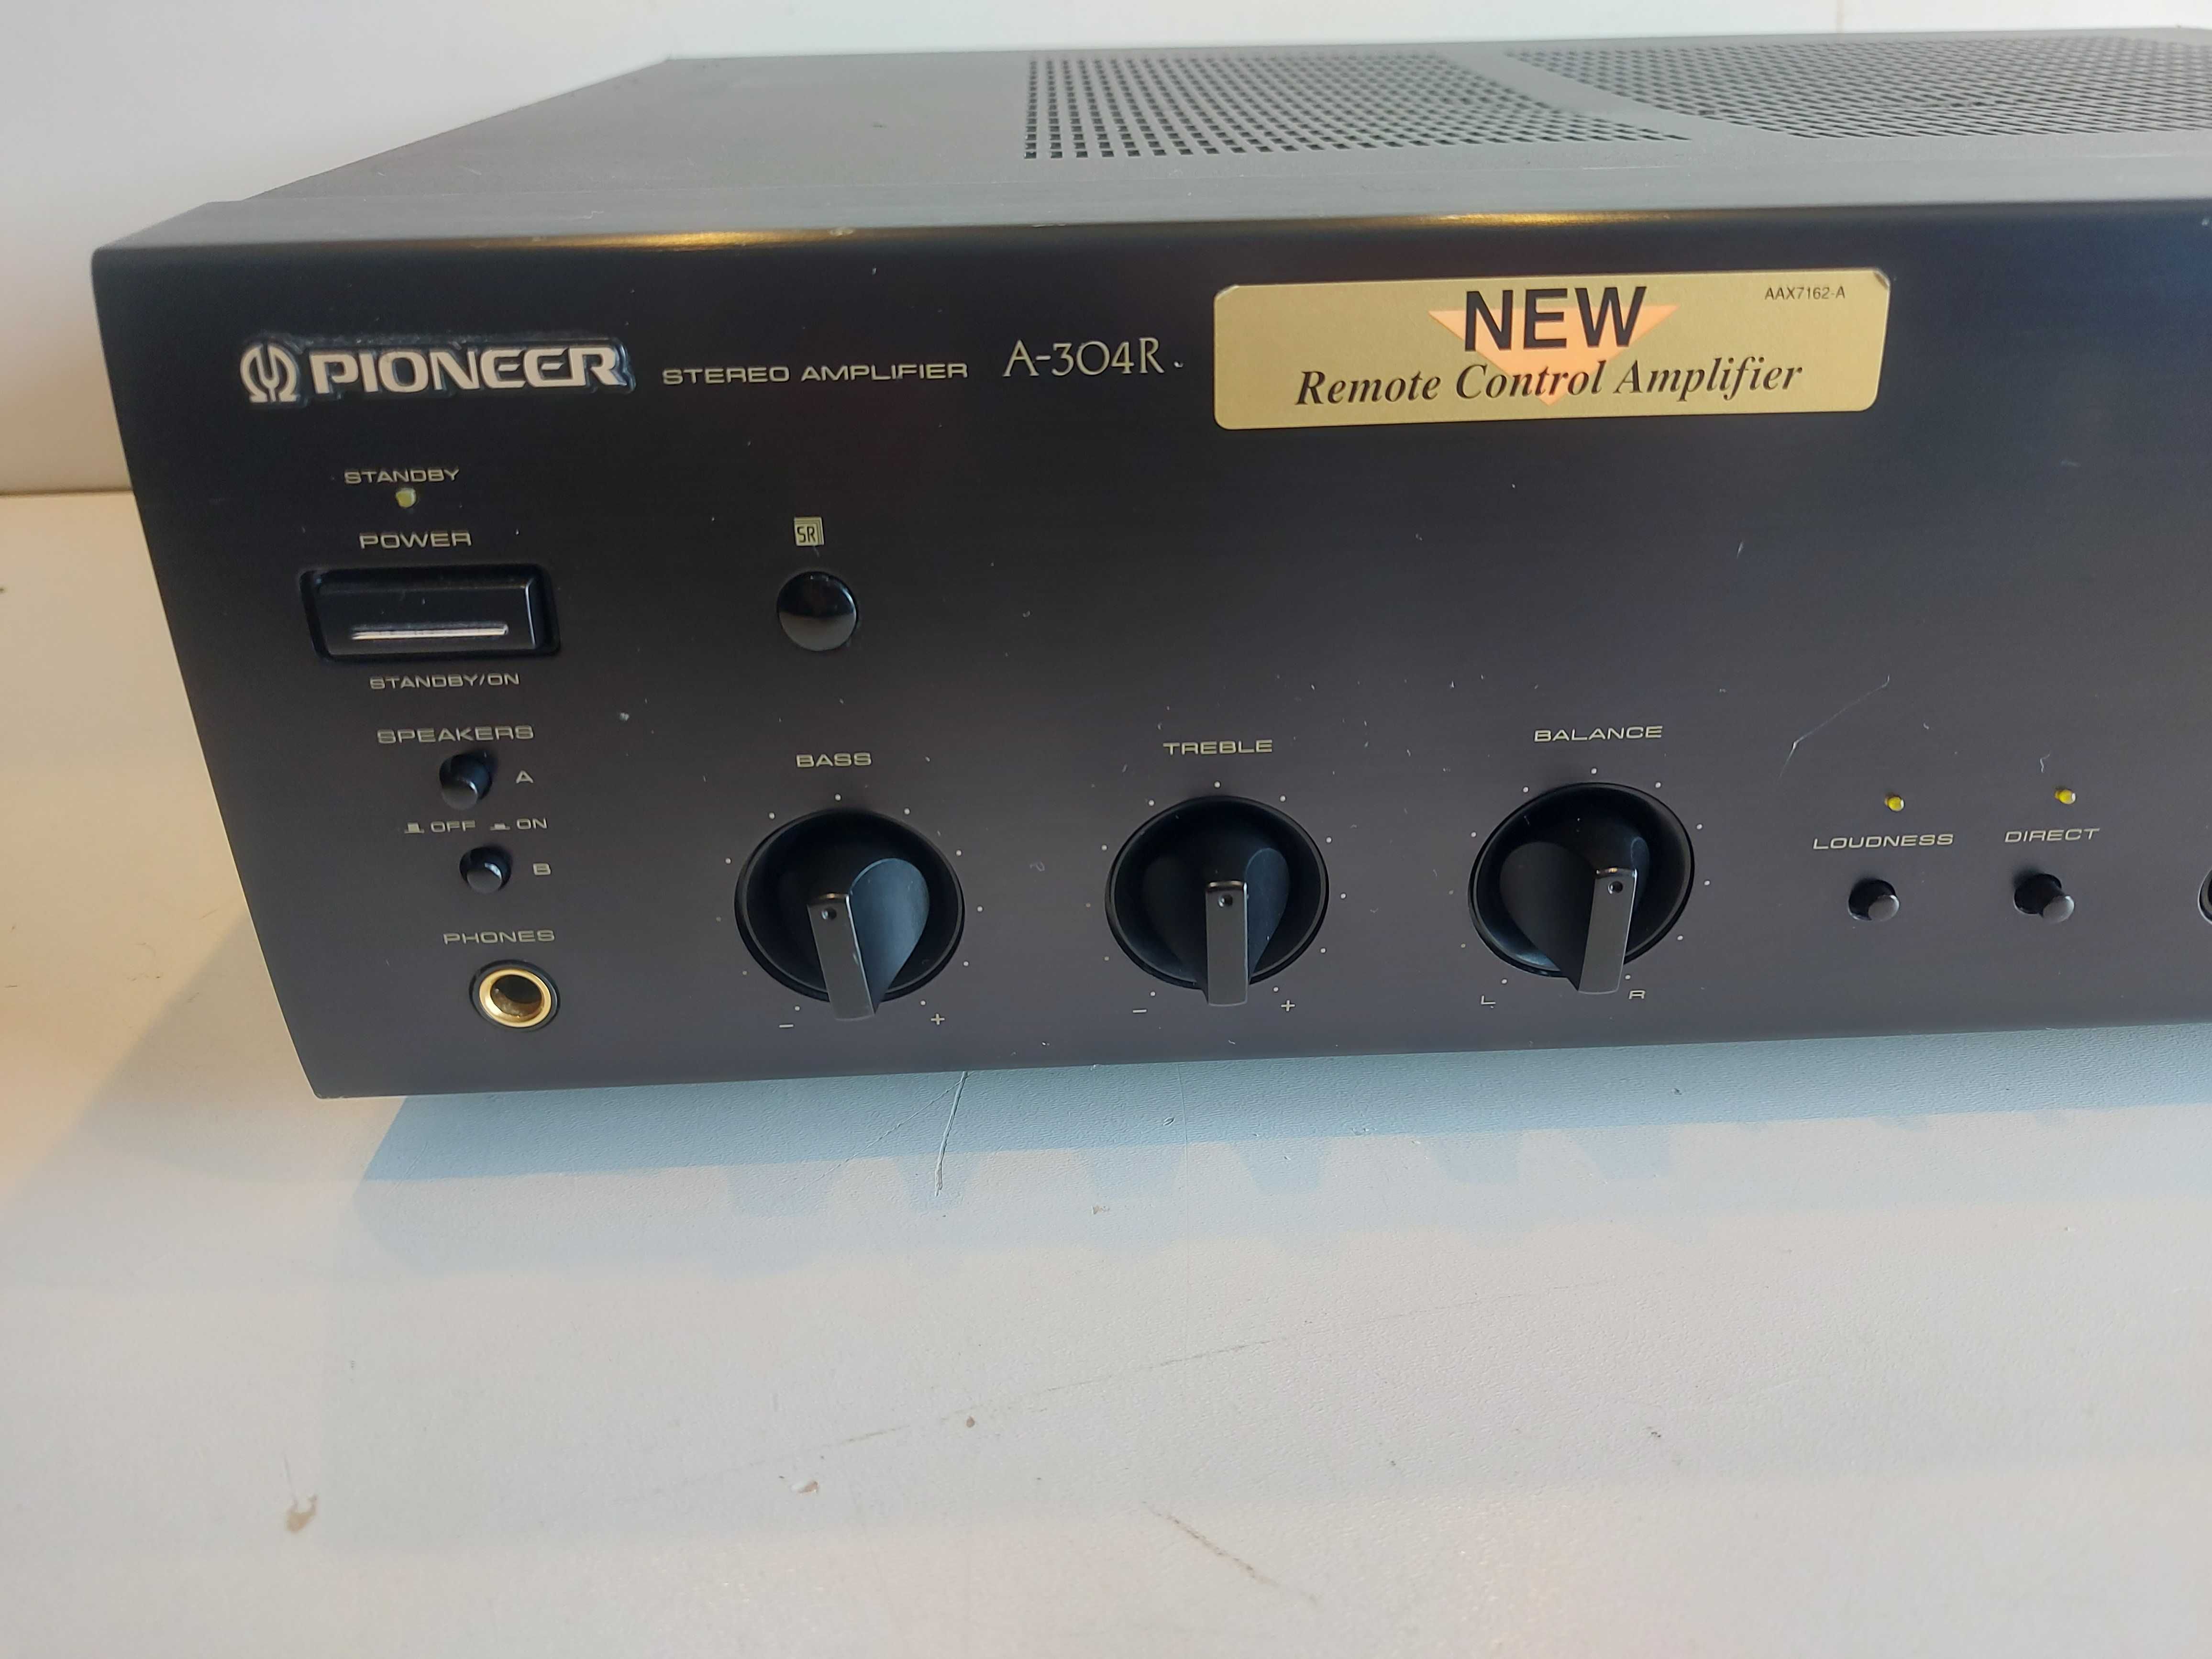 Vand amplificator Pioneer A-304R